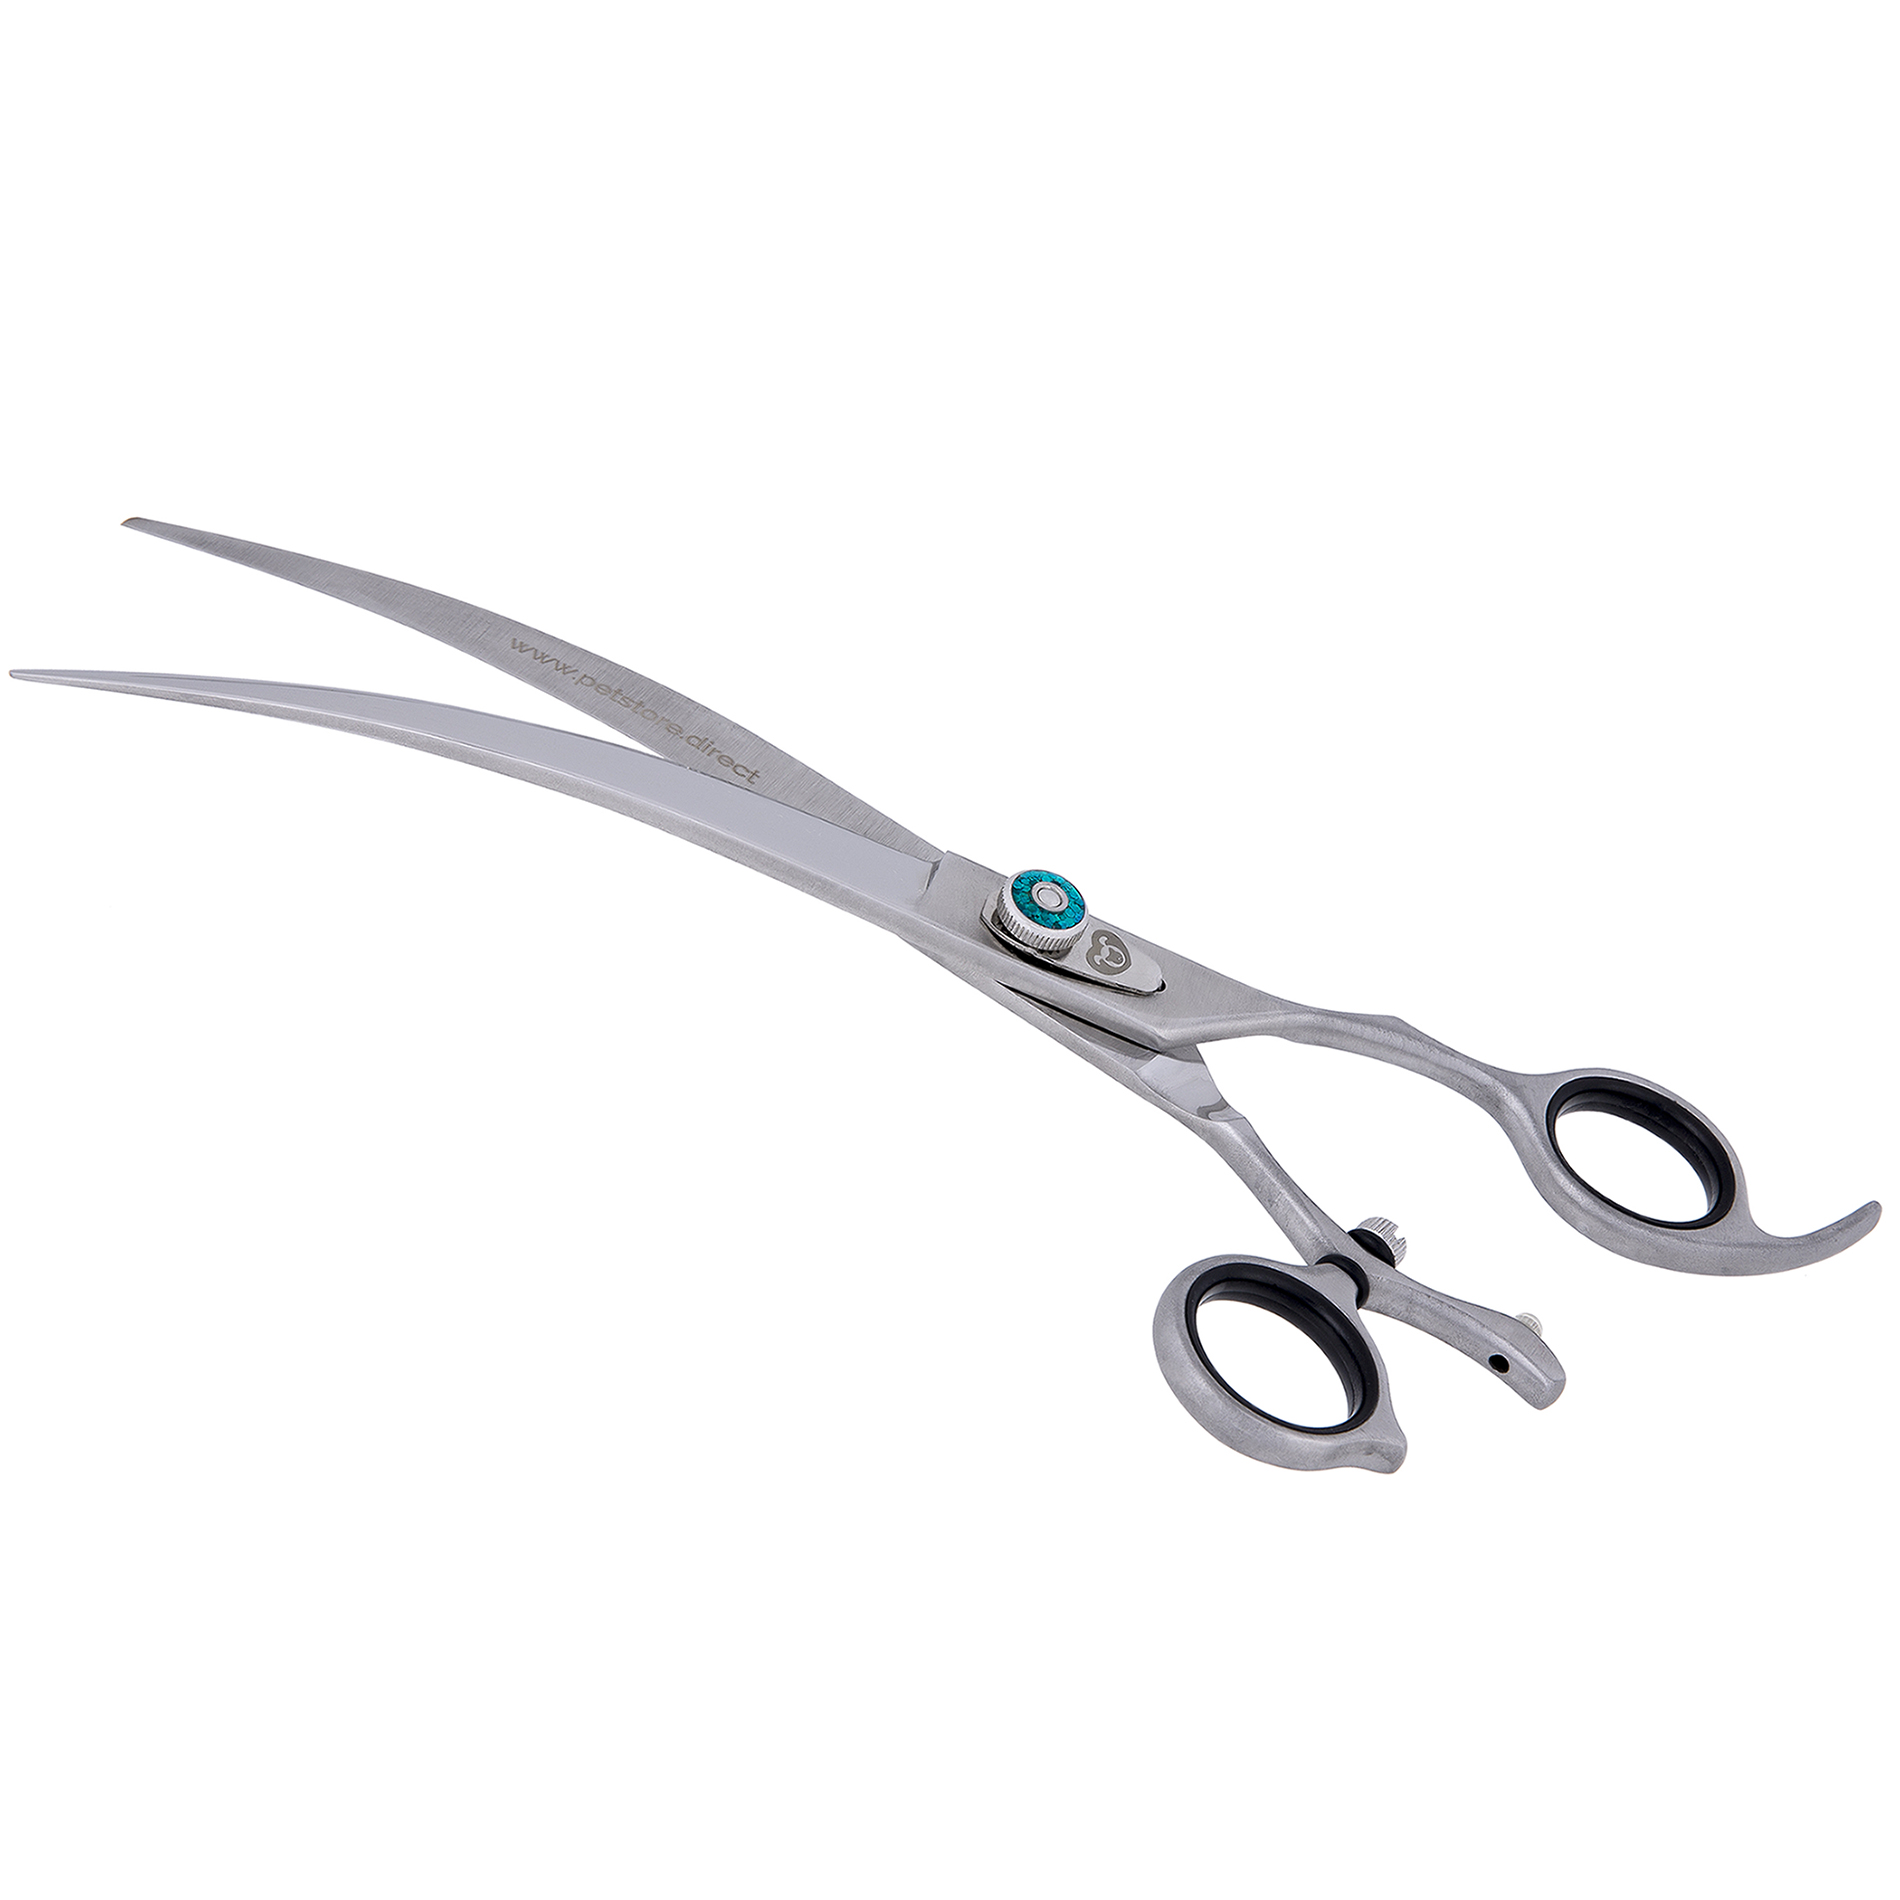 8 inch pet hairdressing scissors set color set high class pet